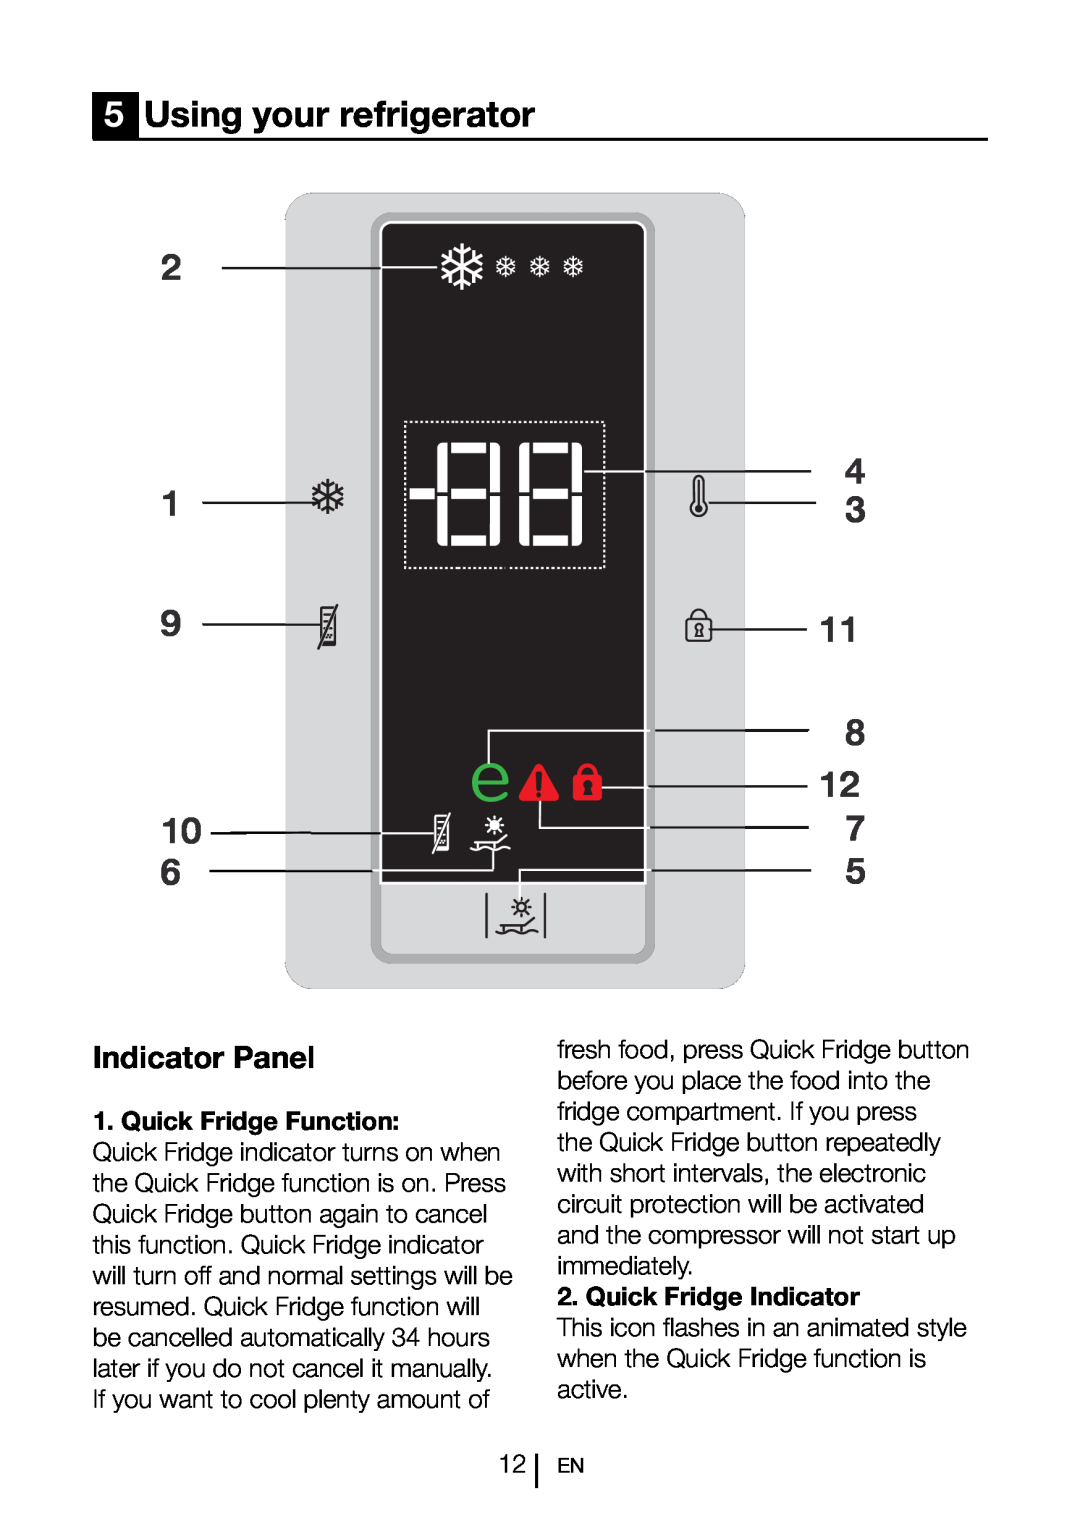 Blomberg SND 9681 XD Using your refrigerator, Indicator Panel, Quick Fridge Function, Quick Fridge Indicator 